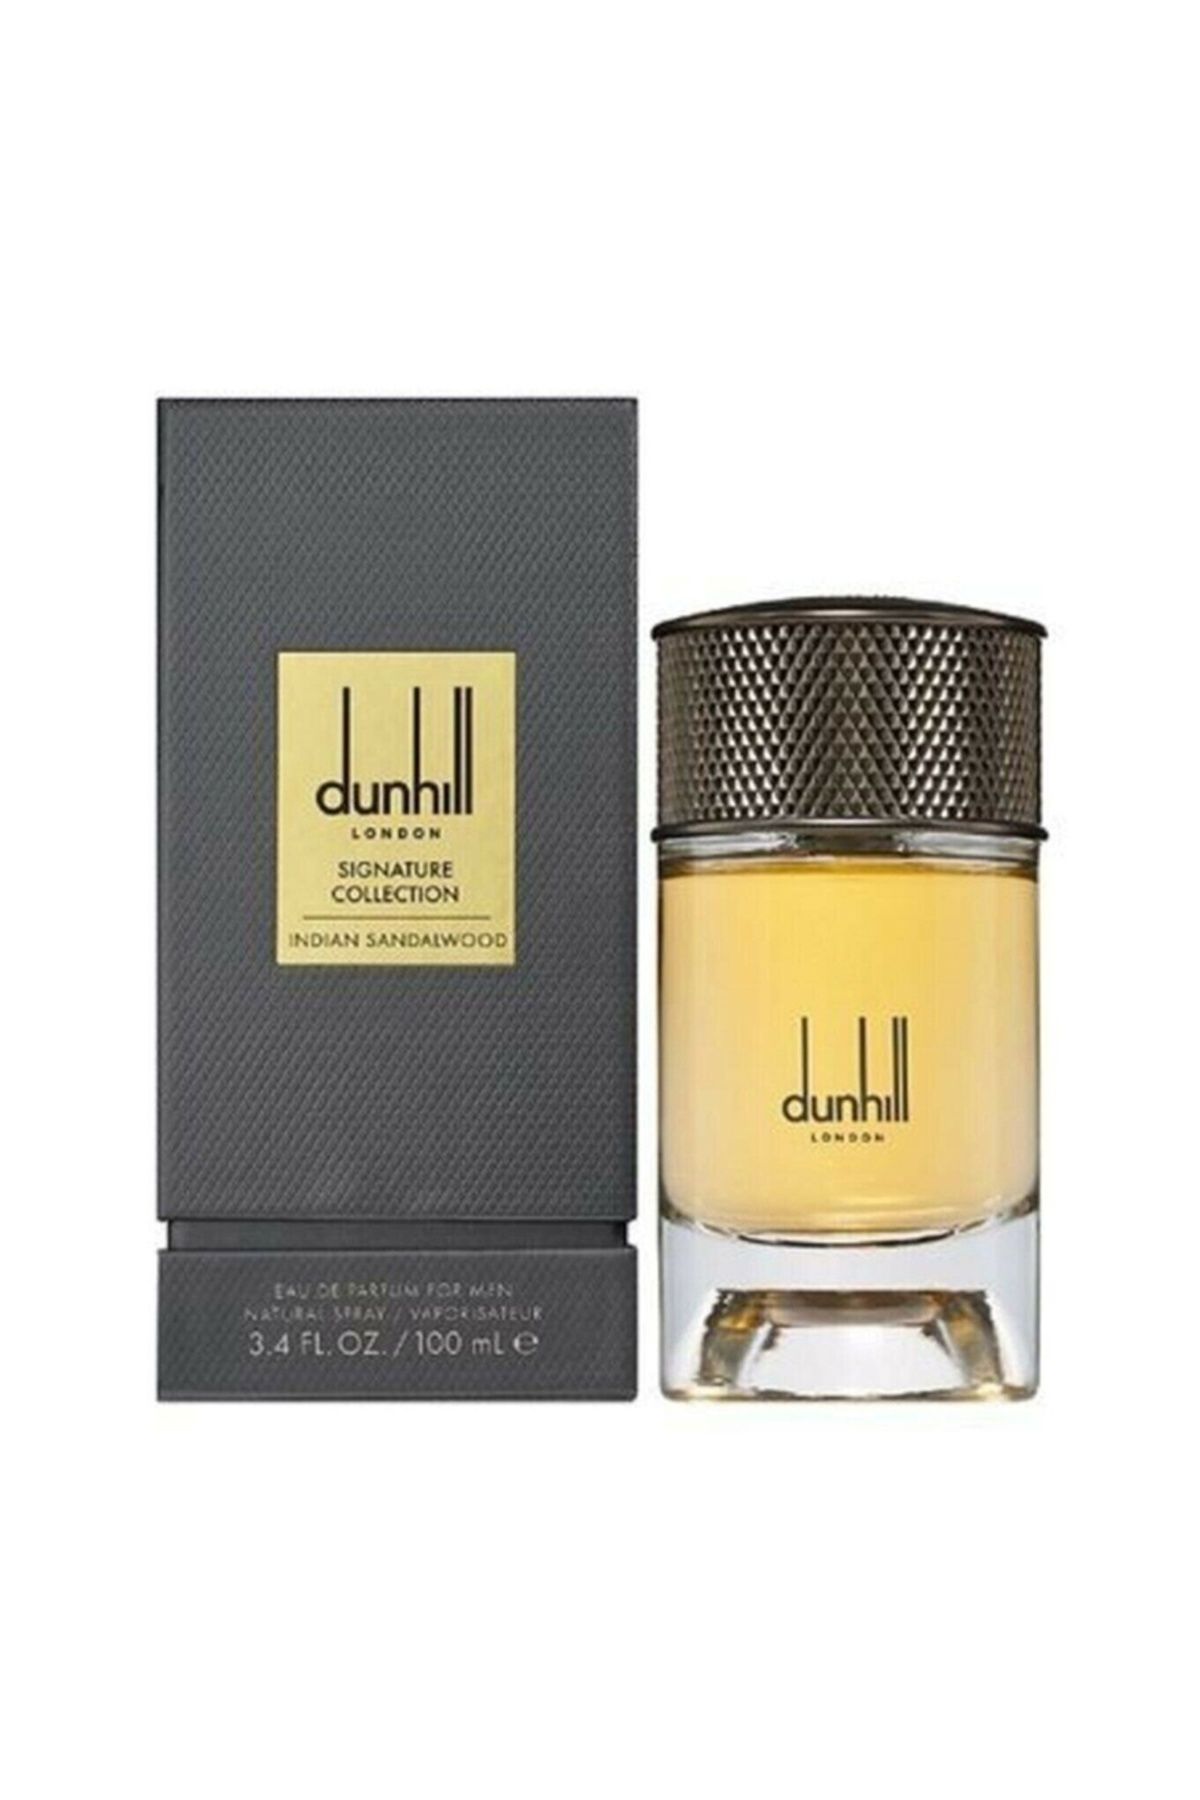 Dunhill Signature Collection Indian Sandalwood Edp 100 Ml Men's Perfume Brightt239